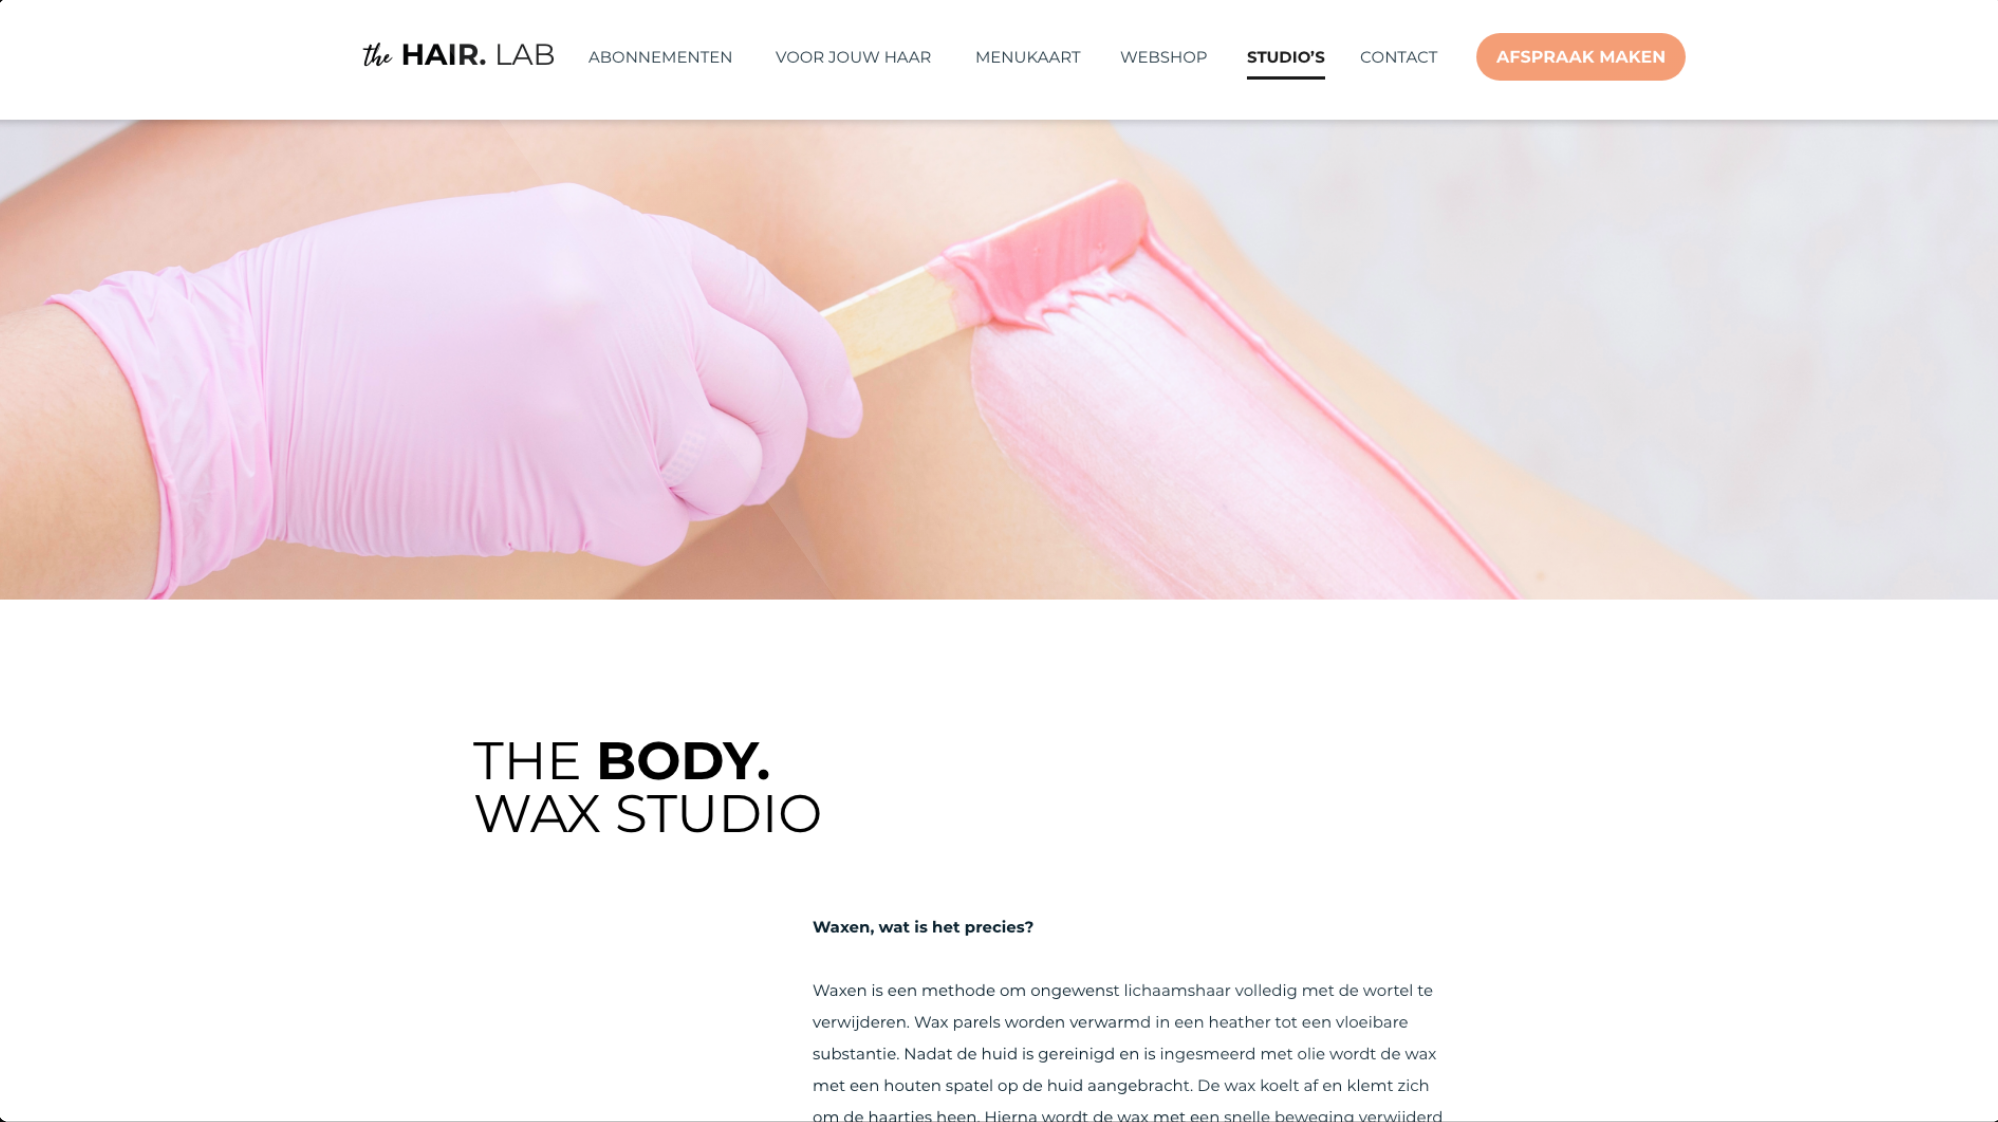 The Body. Wax studio